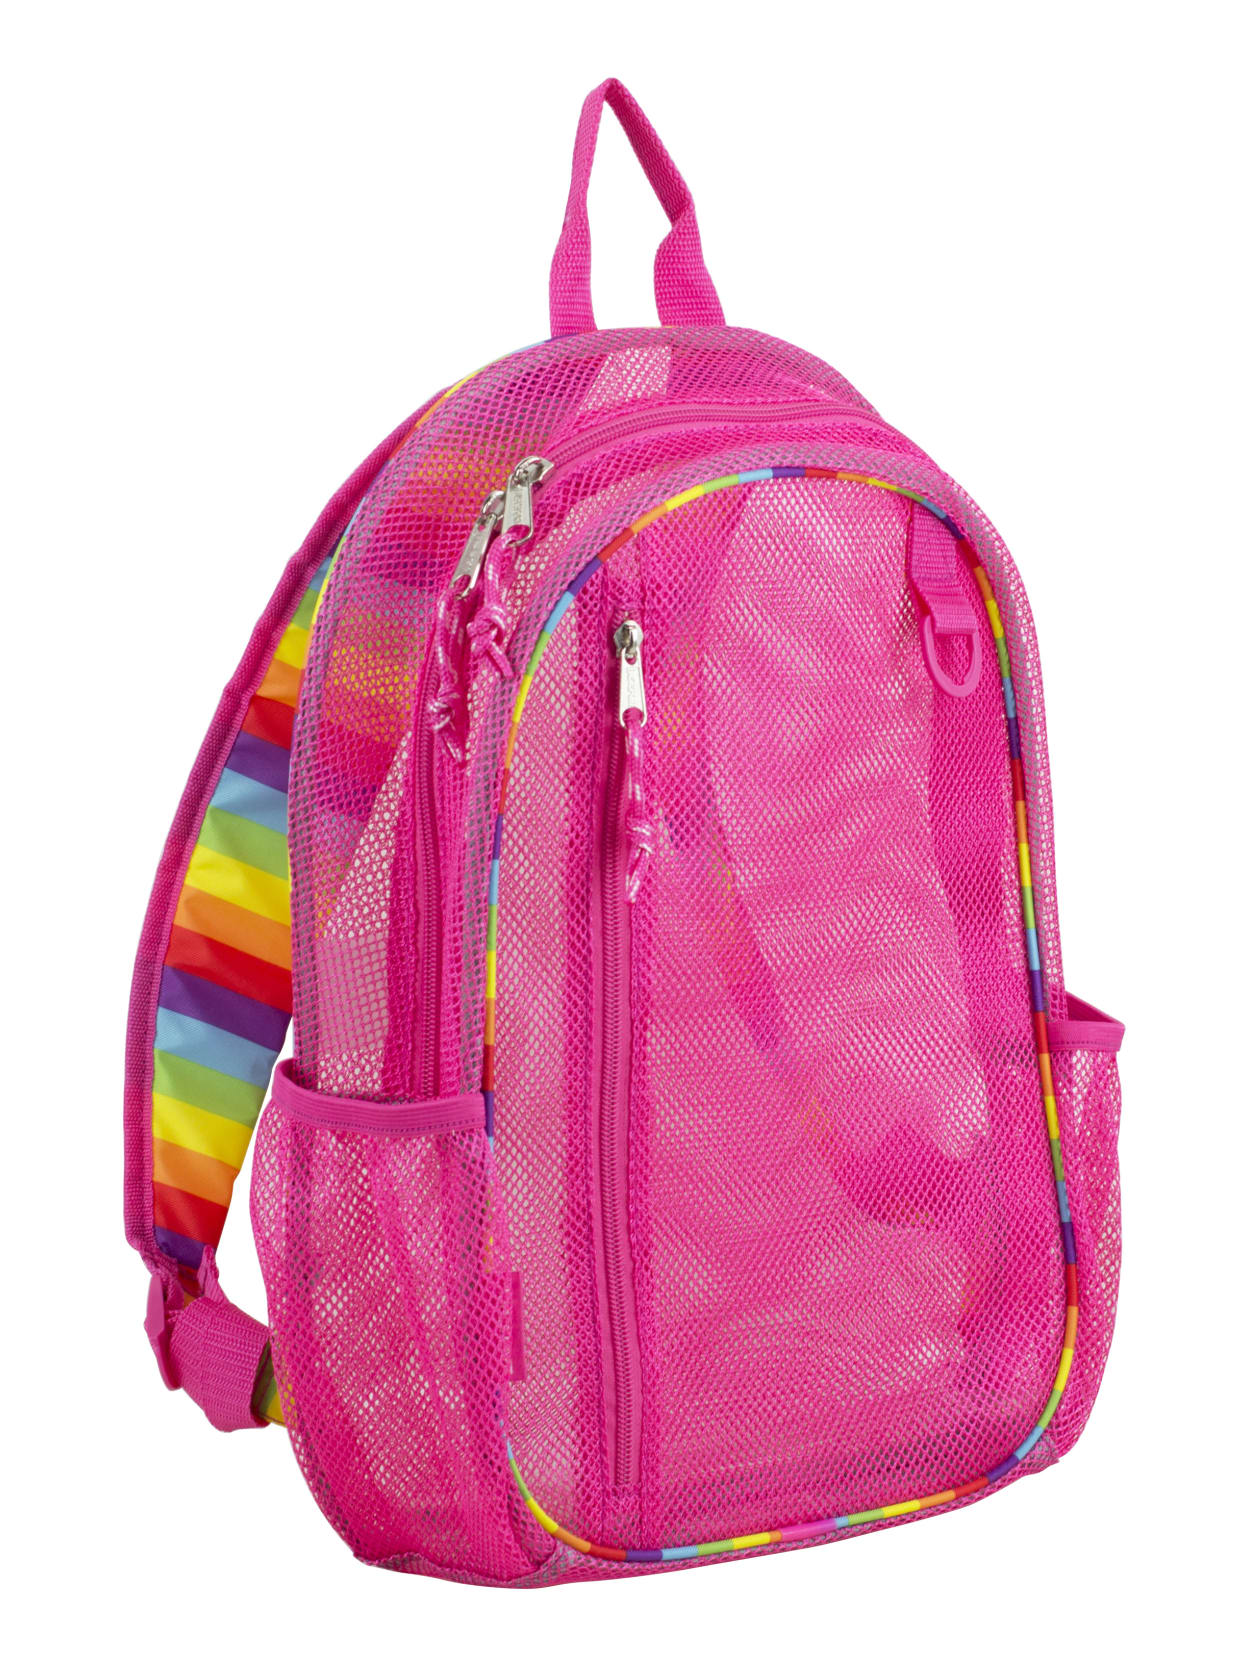 pink mesh backpacks